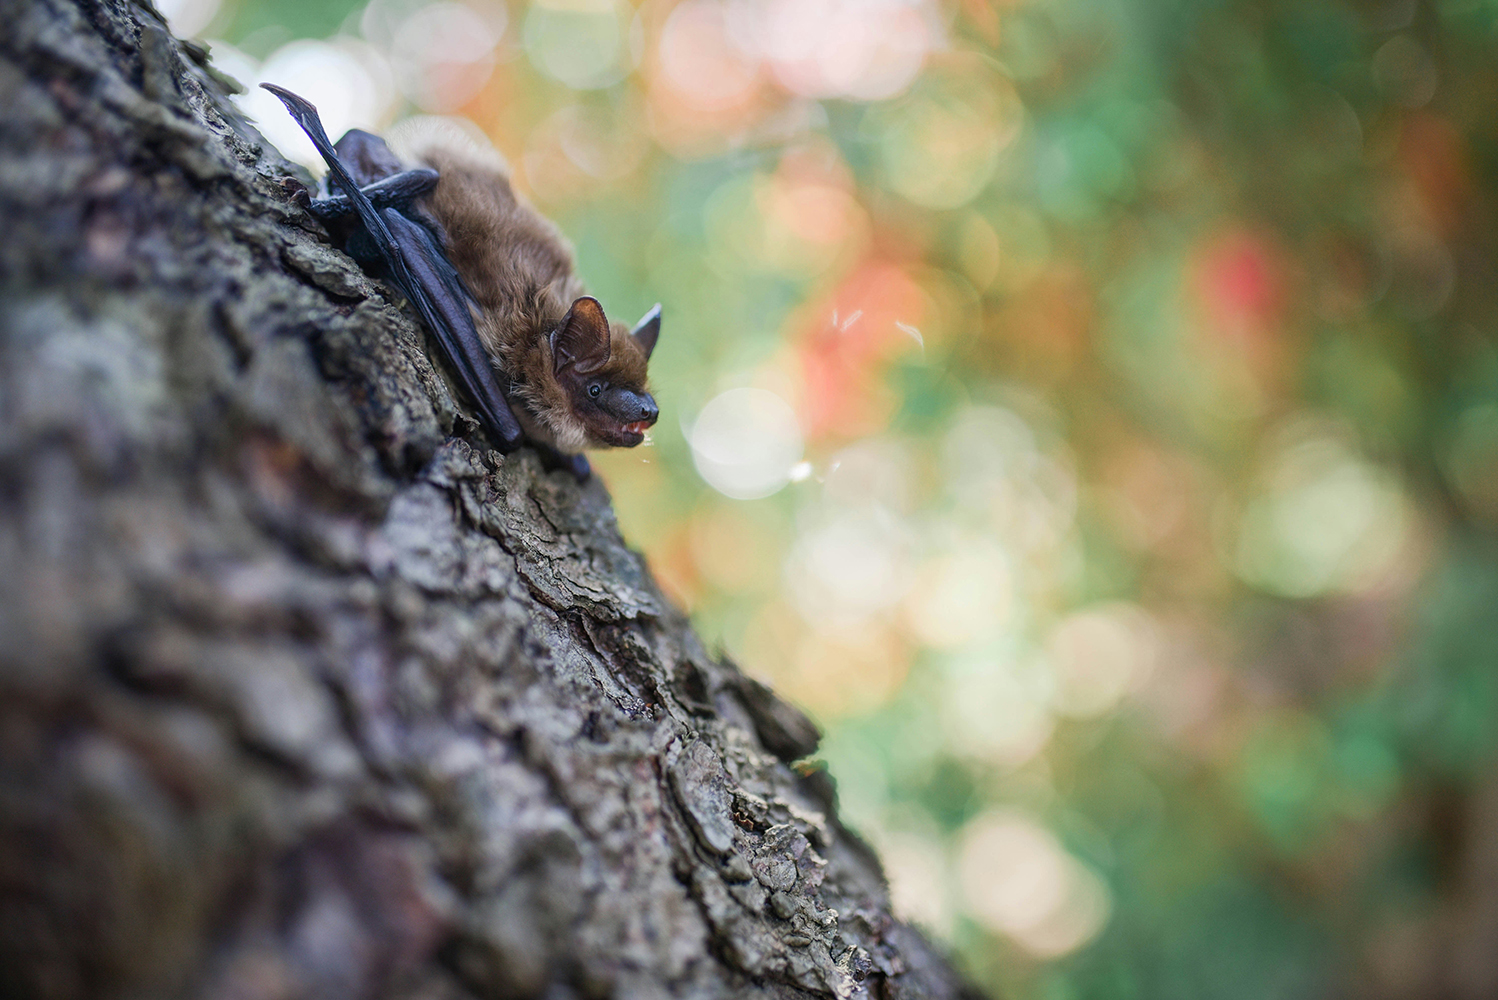 A brown bat on tree bark